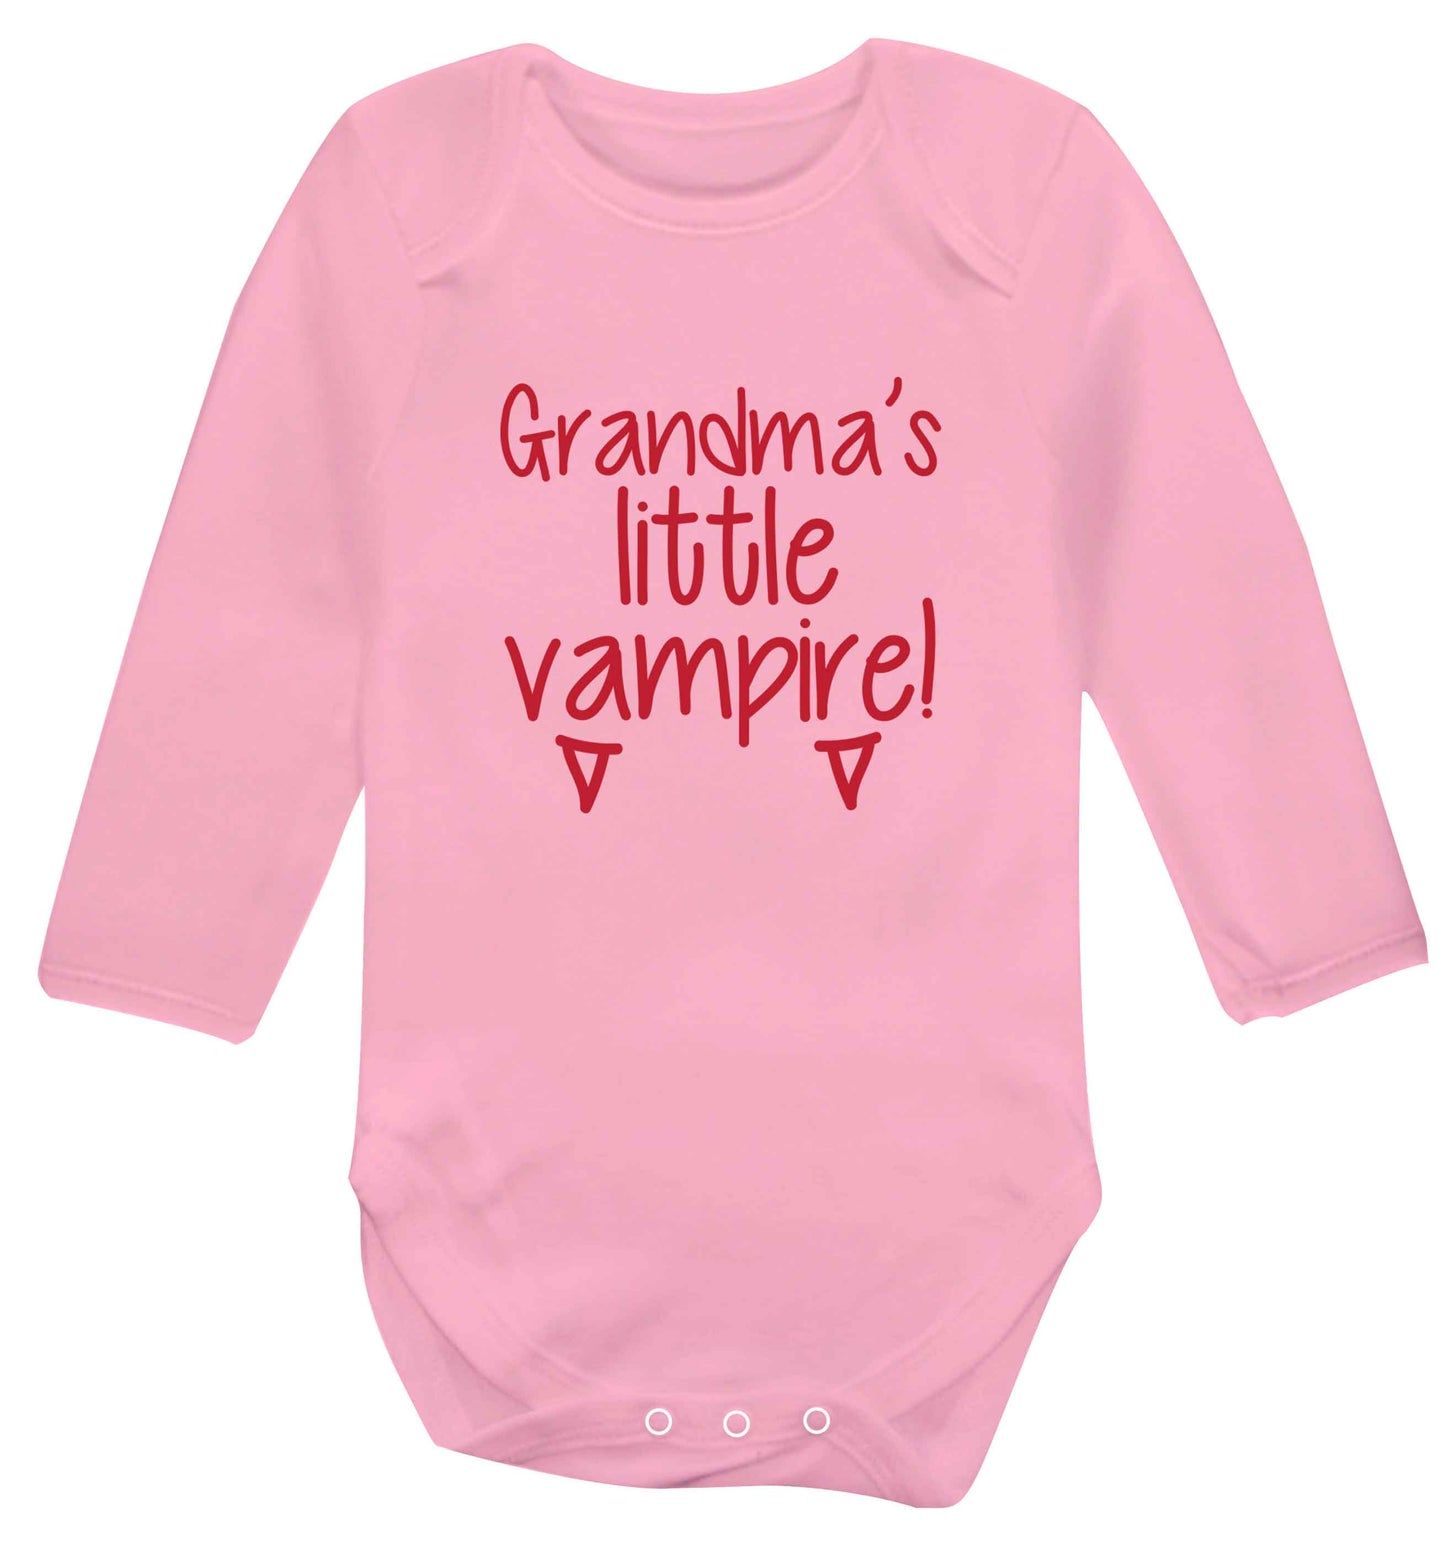 Grandma's little vampire baby vest long sleeved pale pink 6-12 months